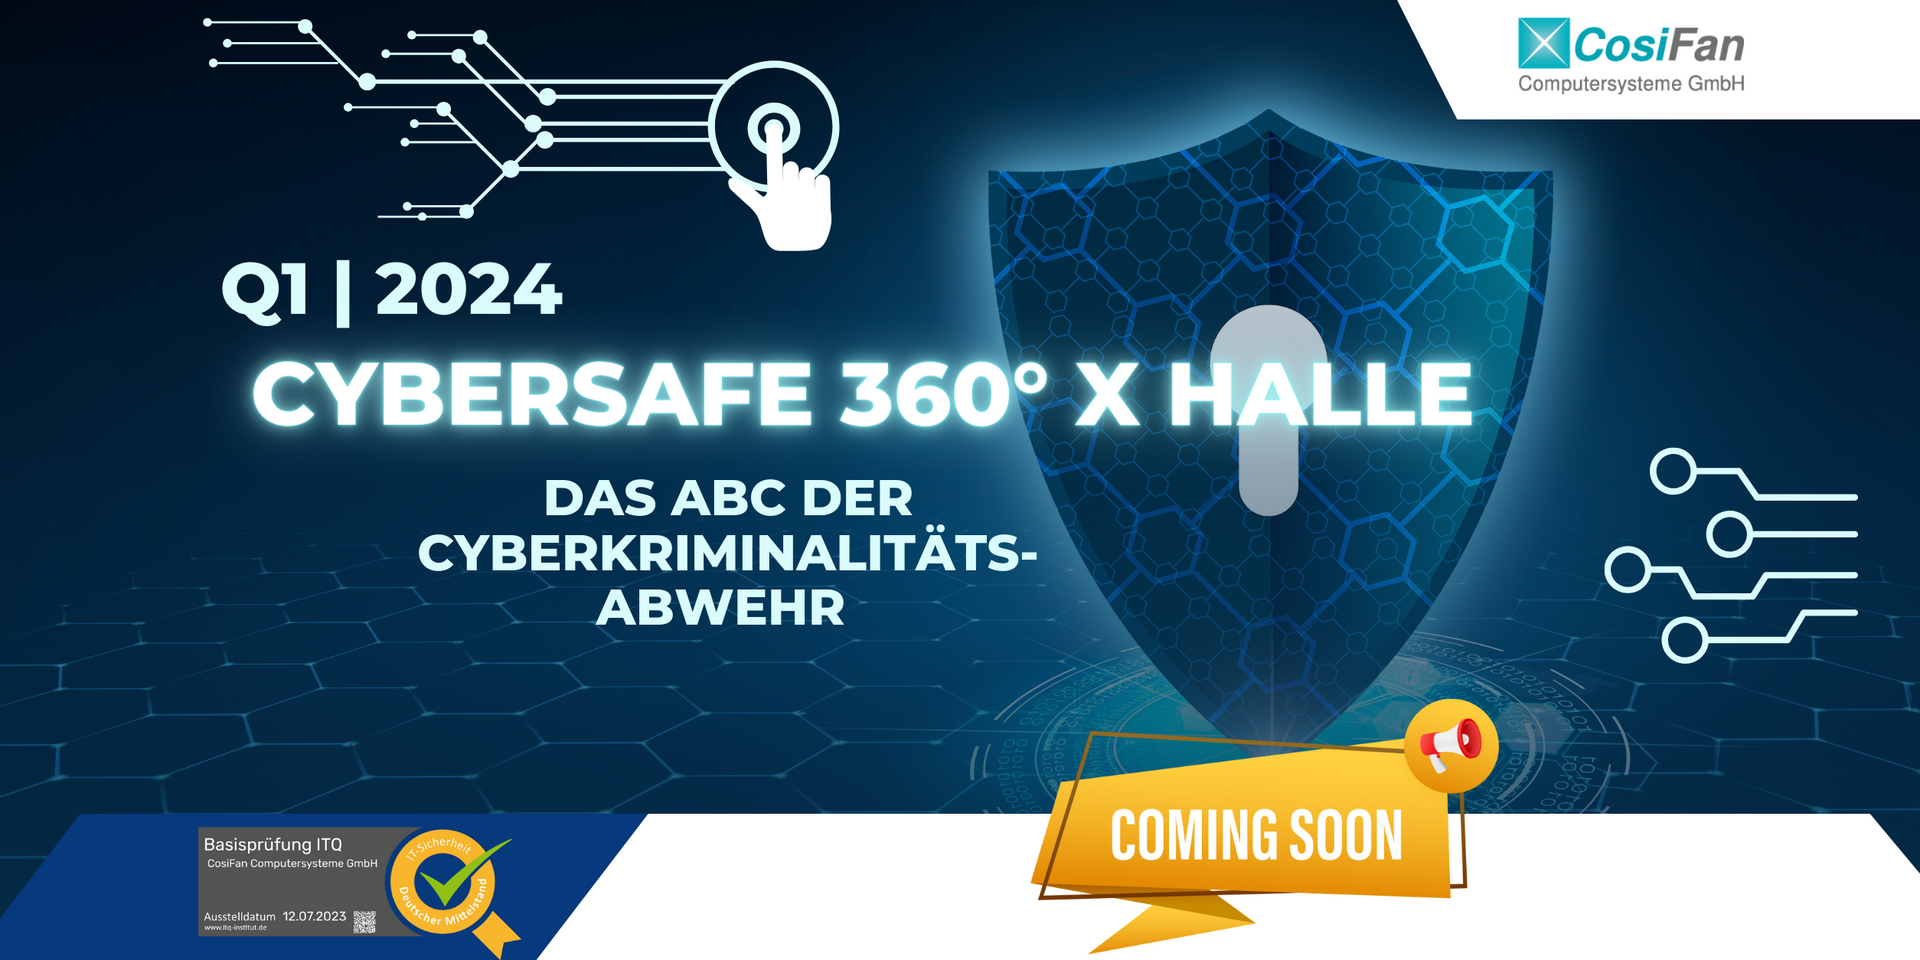 Q1 2024 CyberSafe 360 x Halle